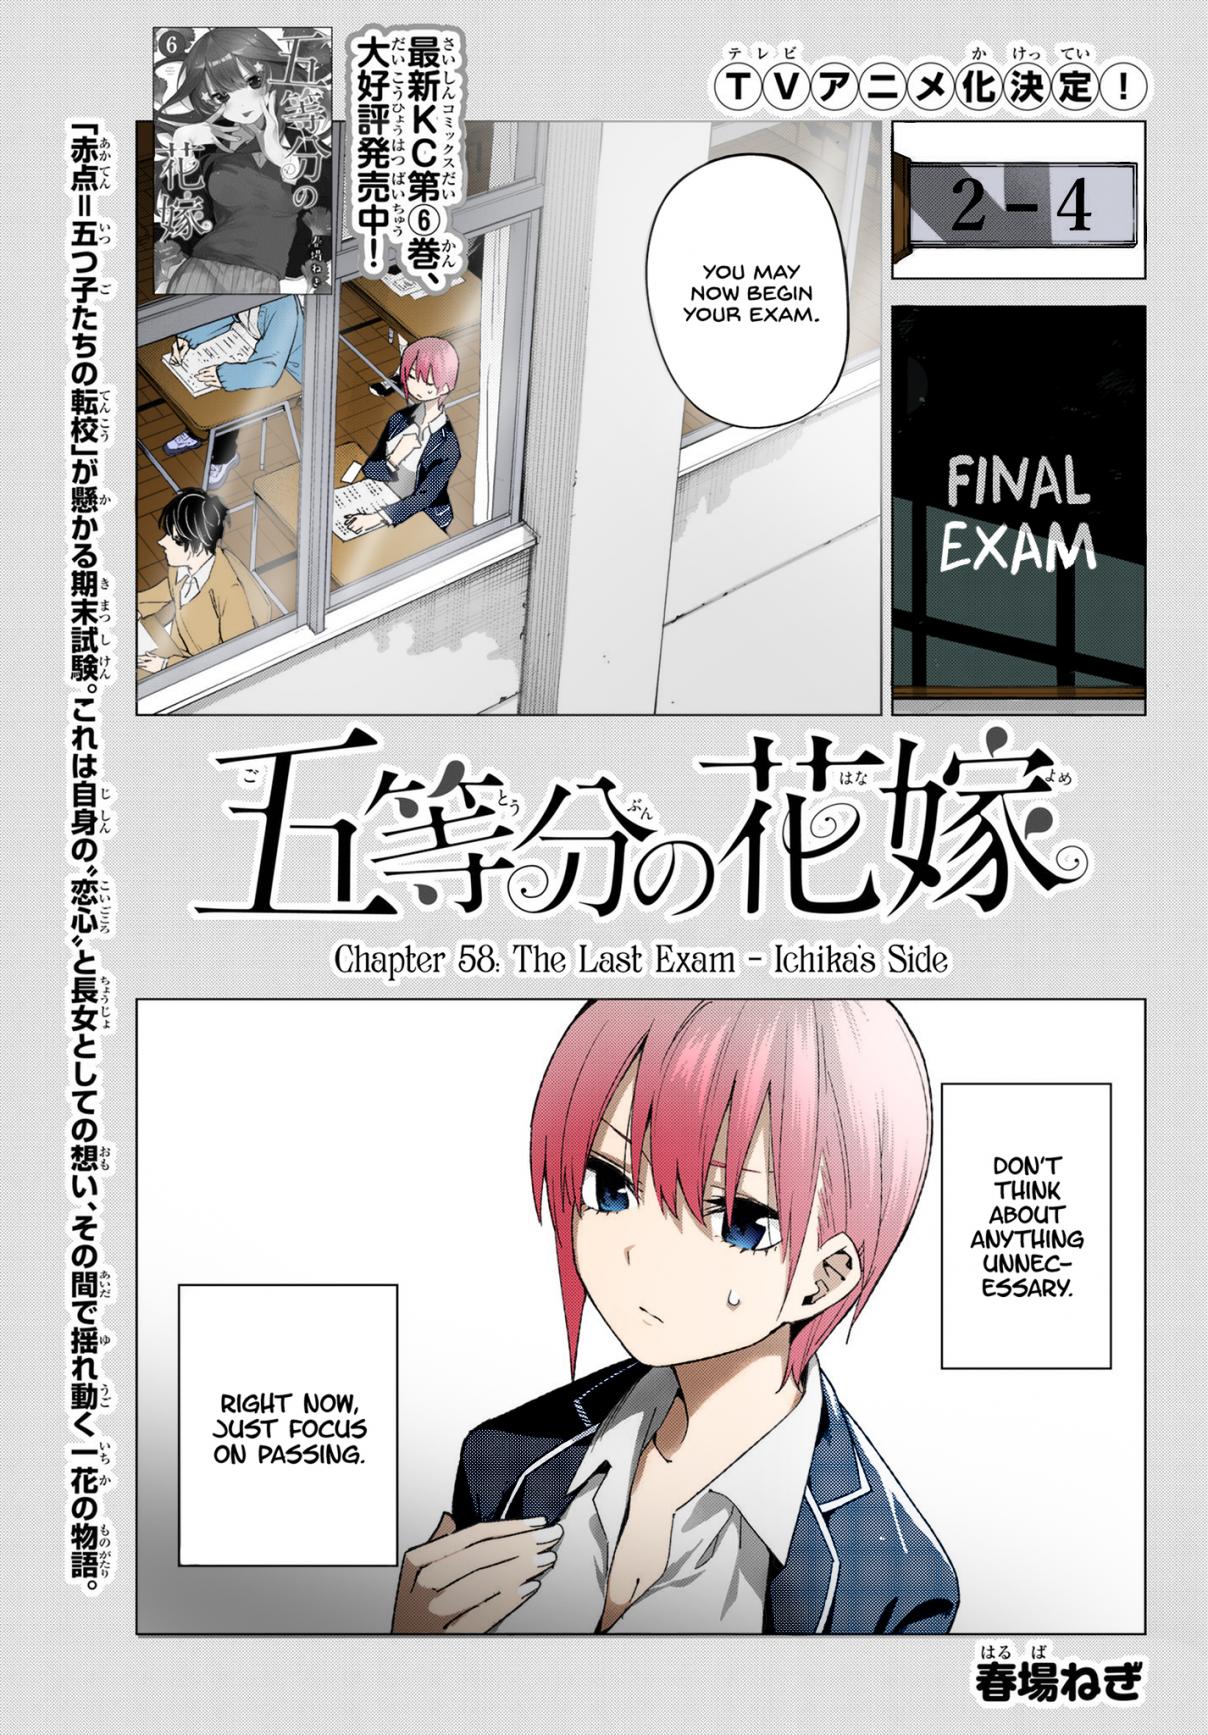 5Toubun no Hanayome (Fan Colored) Vol. 7 Ch. 58 The Last Exam Ichika’s Side